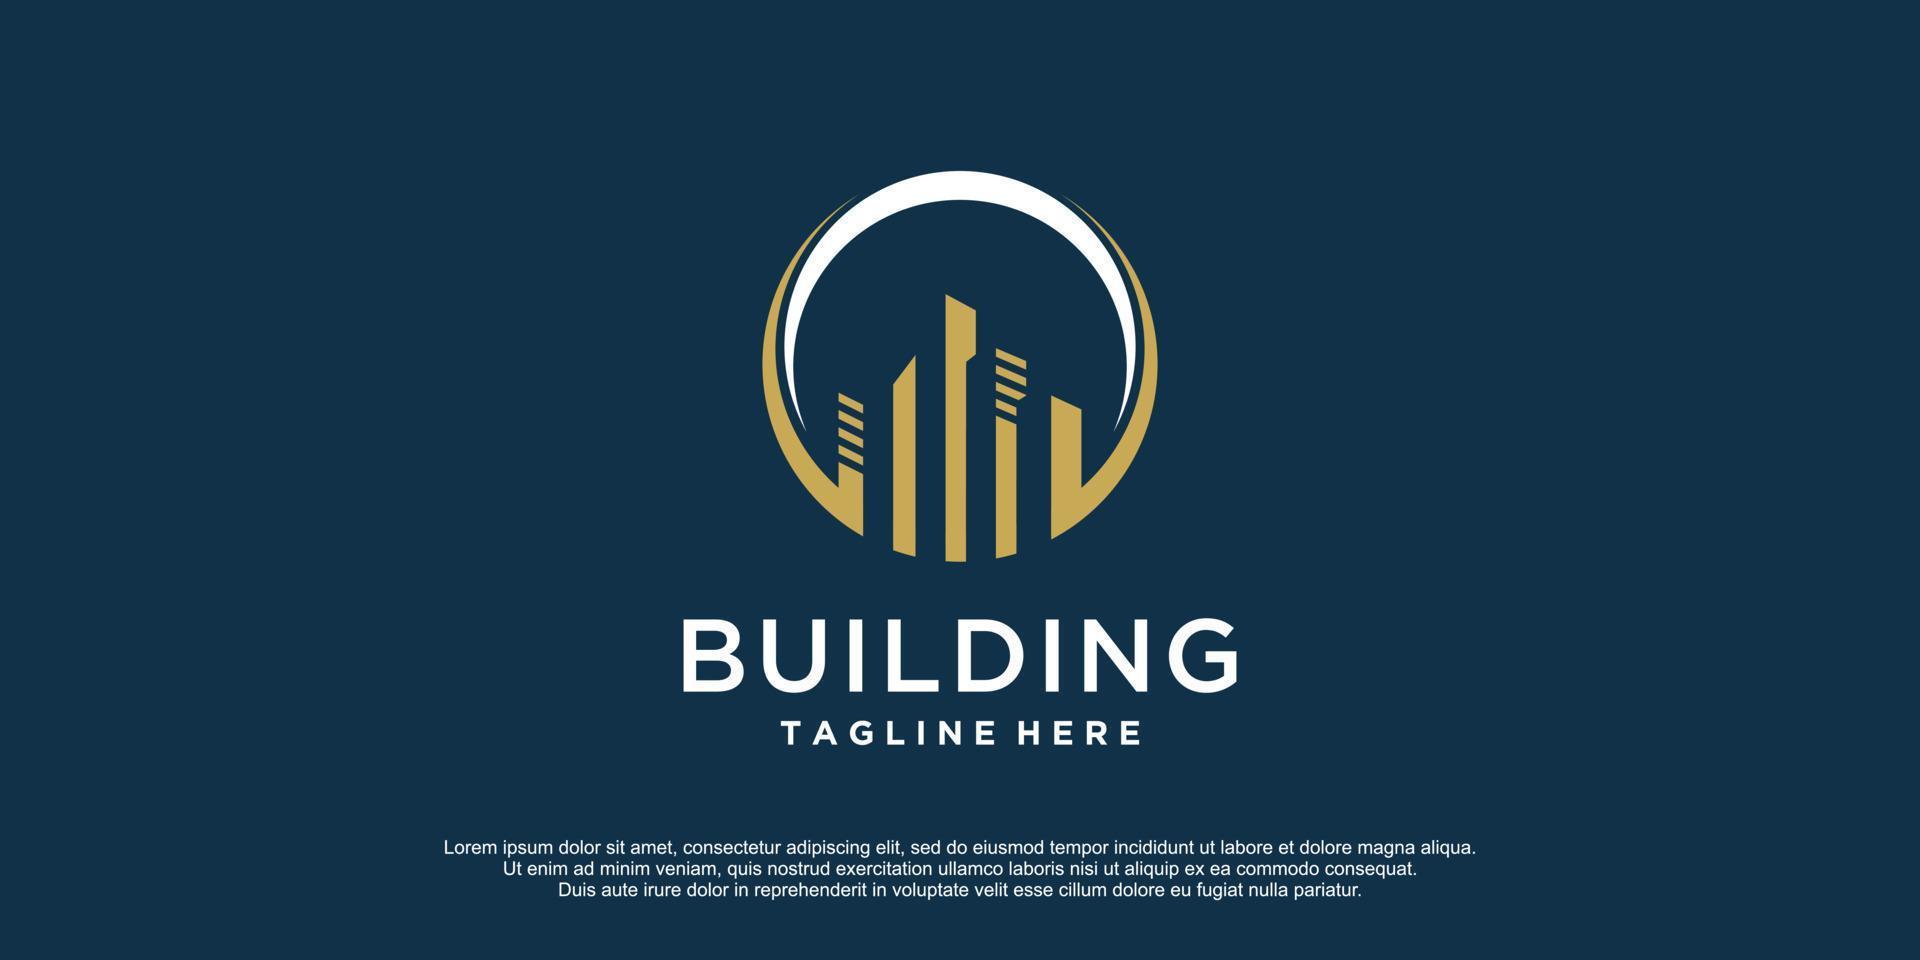 Building logo design for business Premium Vector